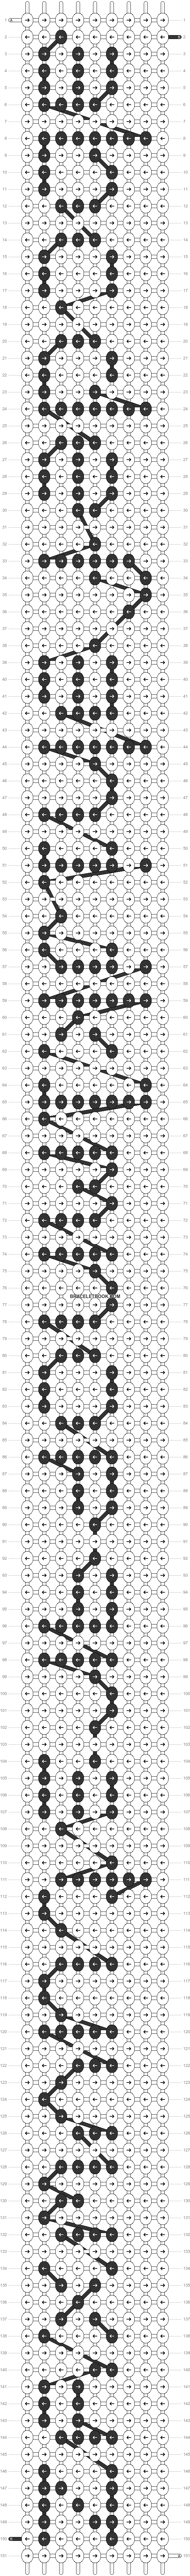 Alpha pattern #46535 variation #72449 pattern